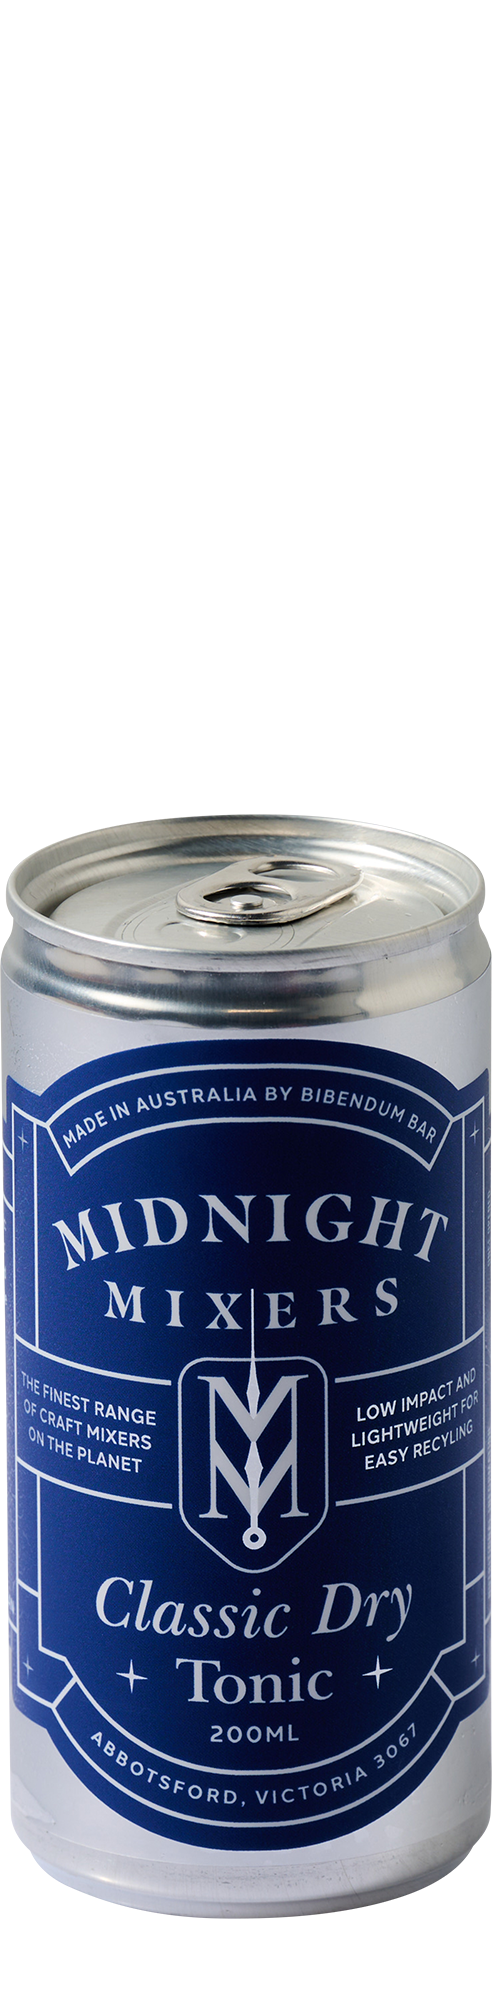 Midnight Mixers Classic Dry Tonic 6 X 4 pack